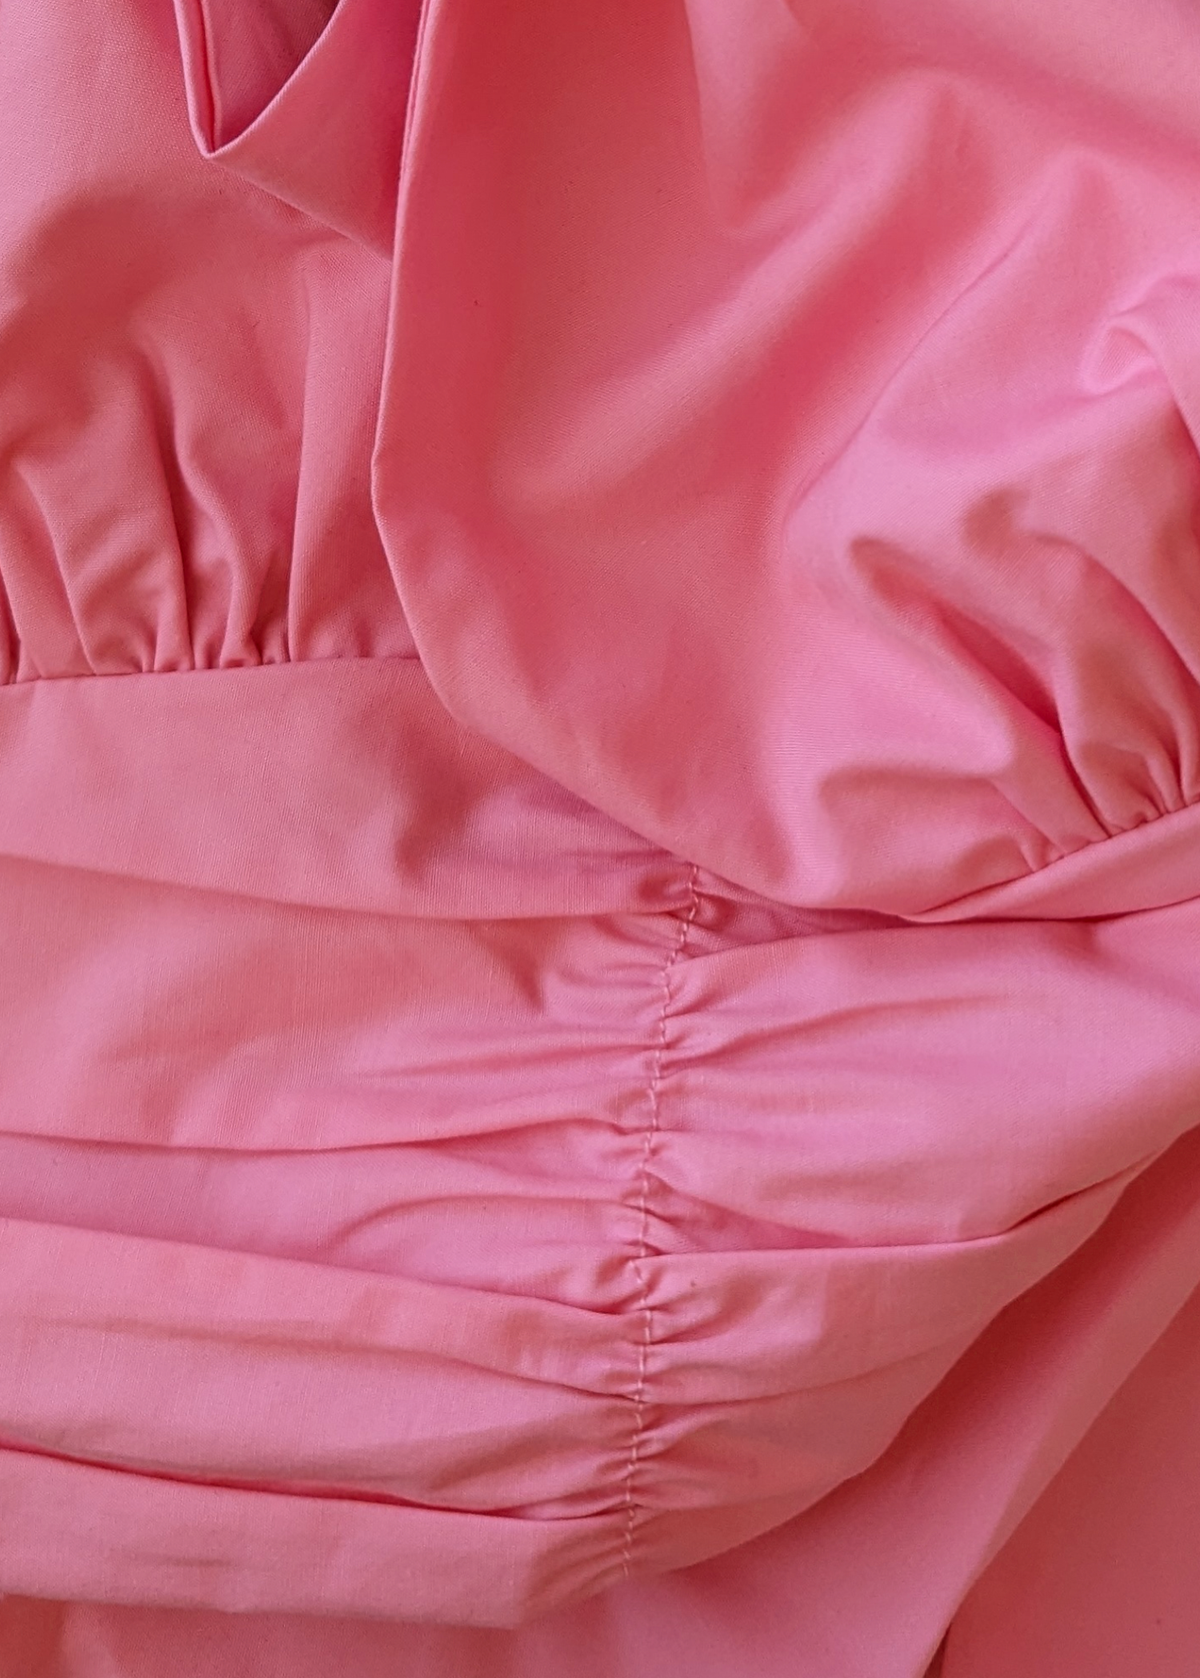 70s inspired bubblegum pink Marilyn cotton Halter Crop Top by Glamorous UK